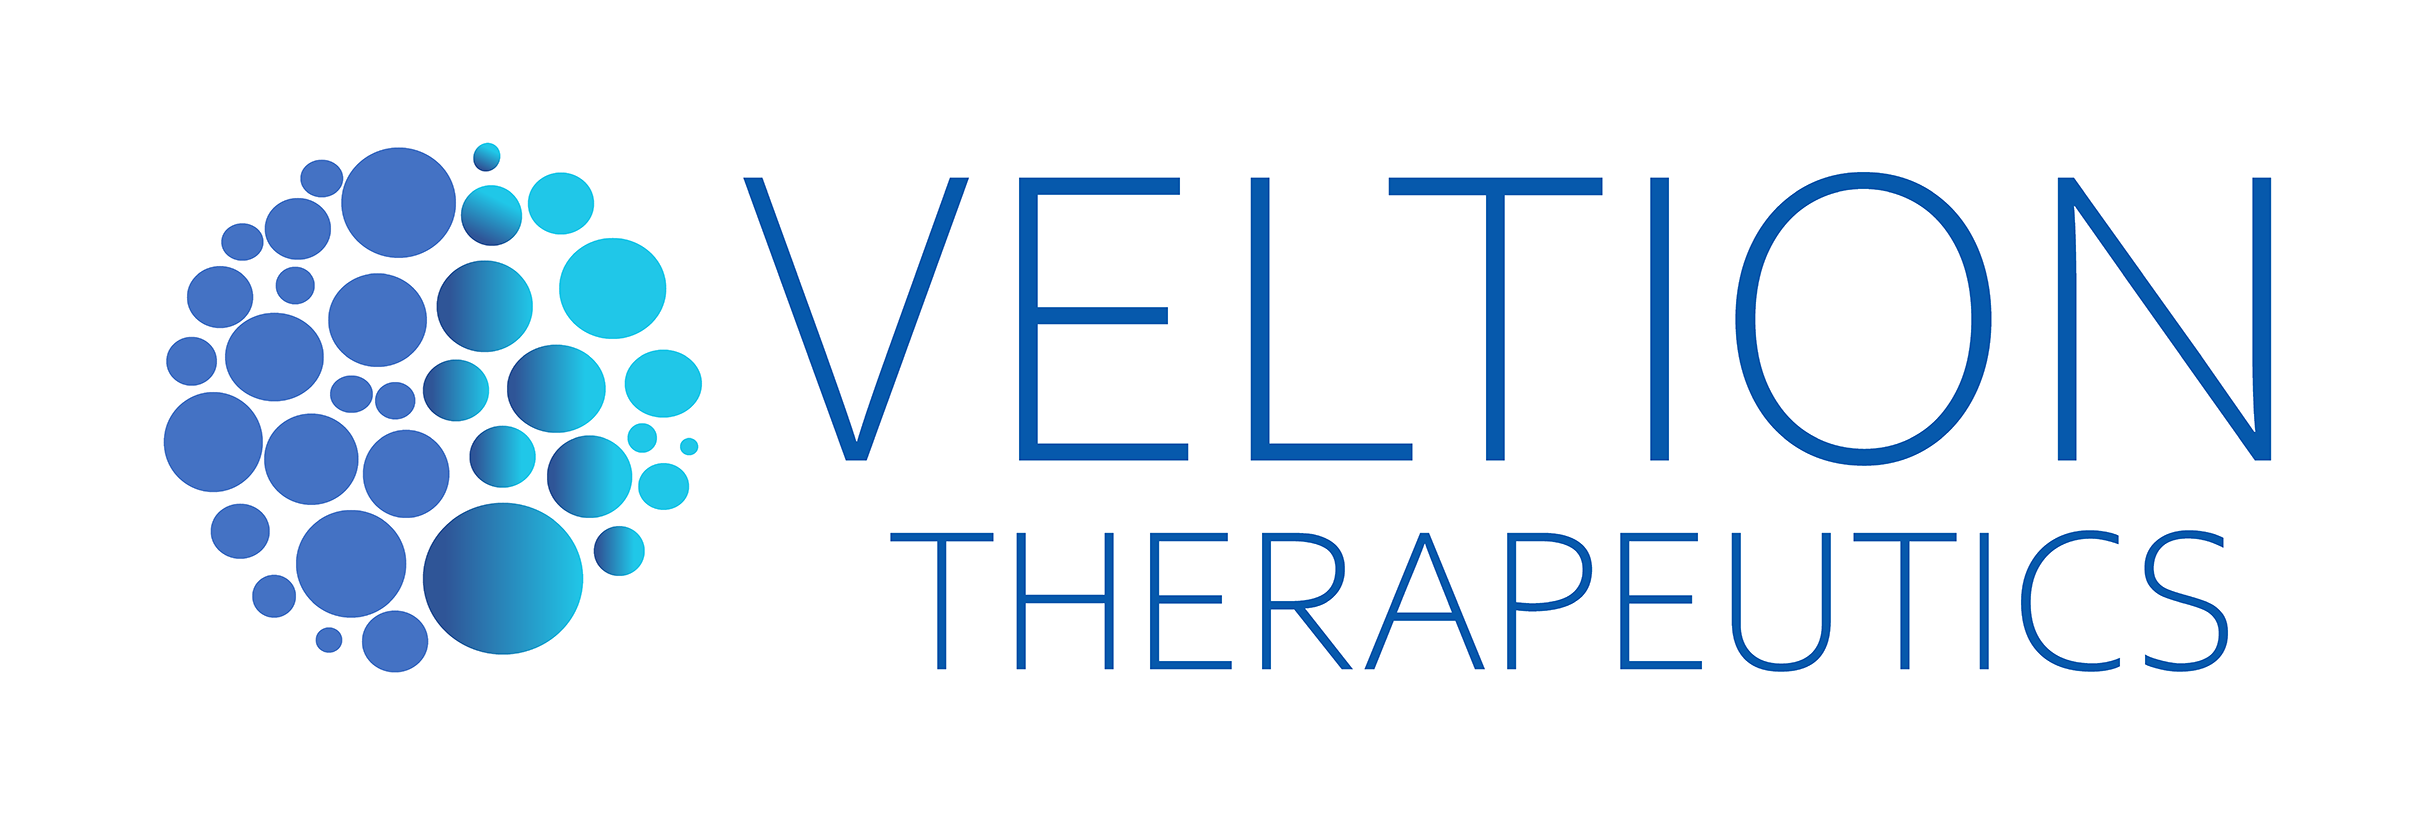 Veltion Therapeutics